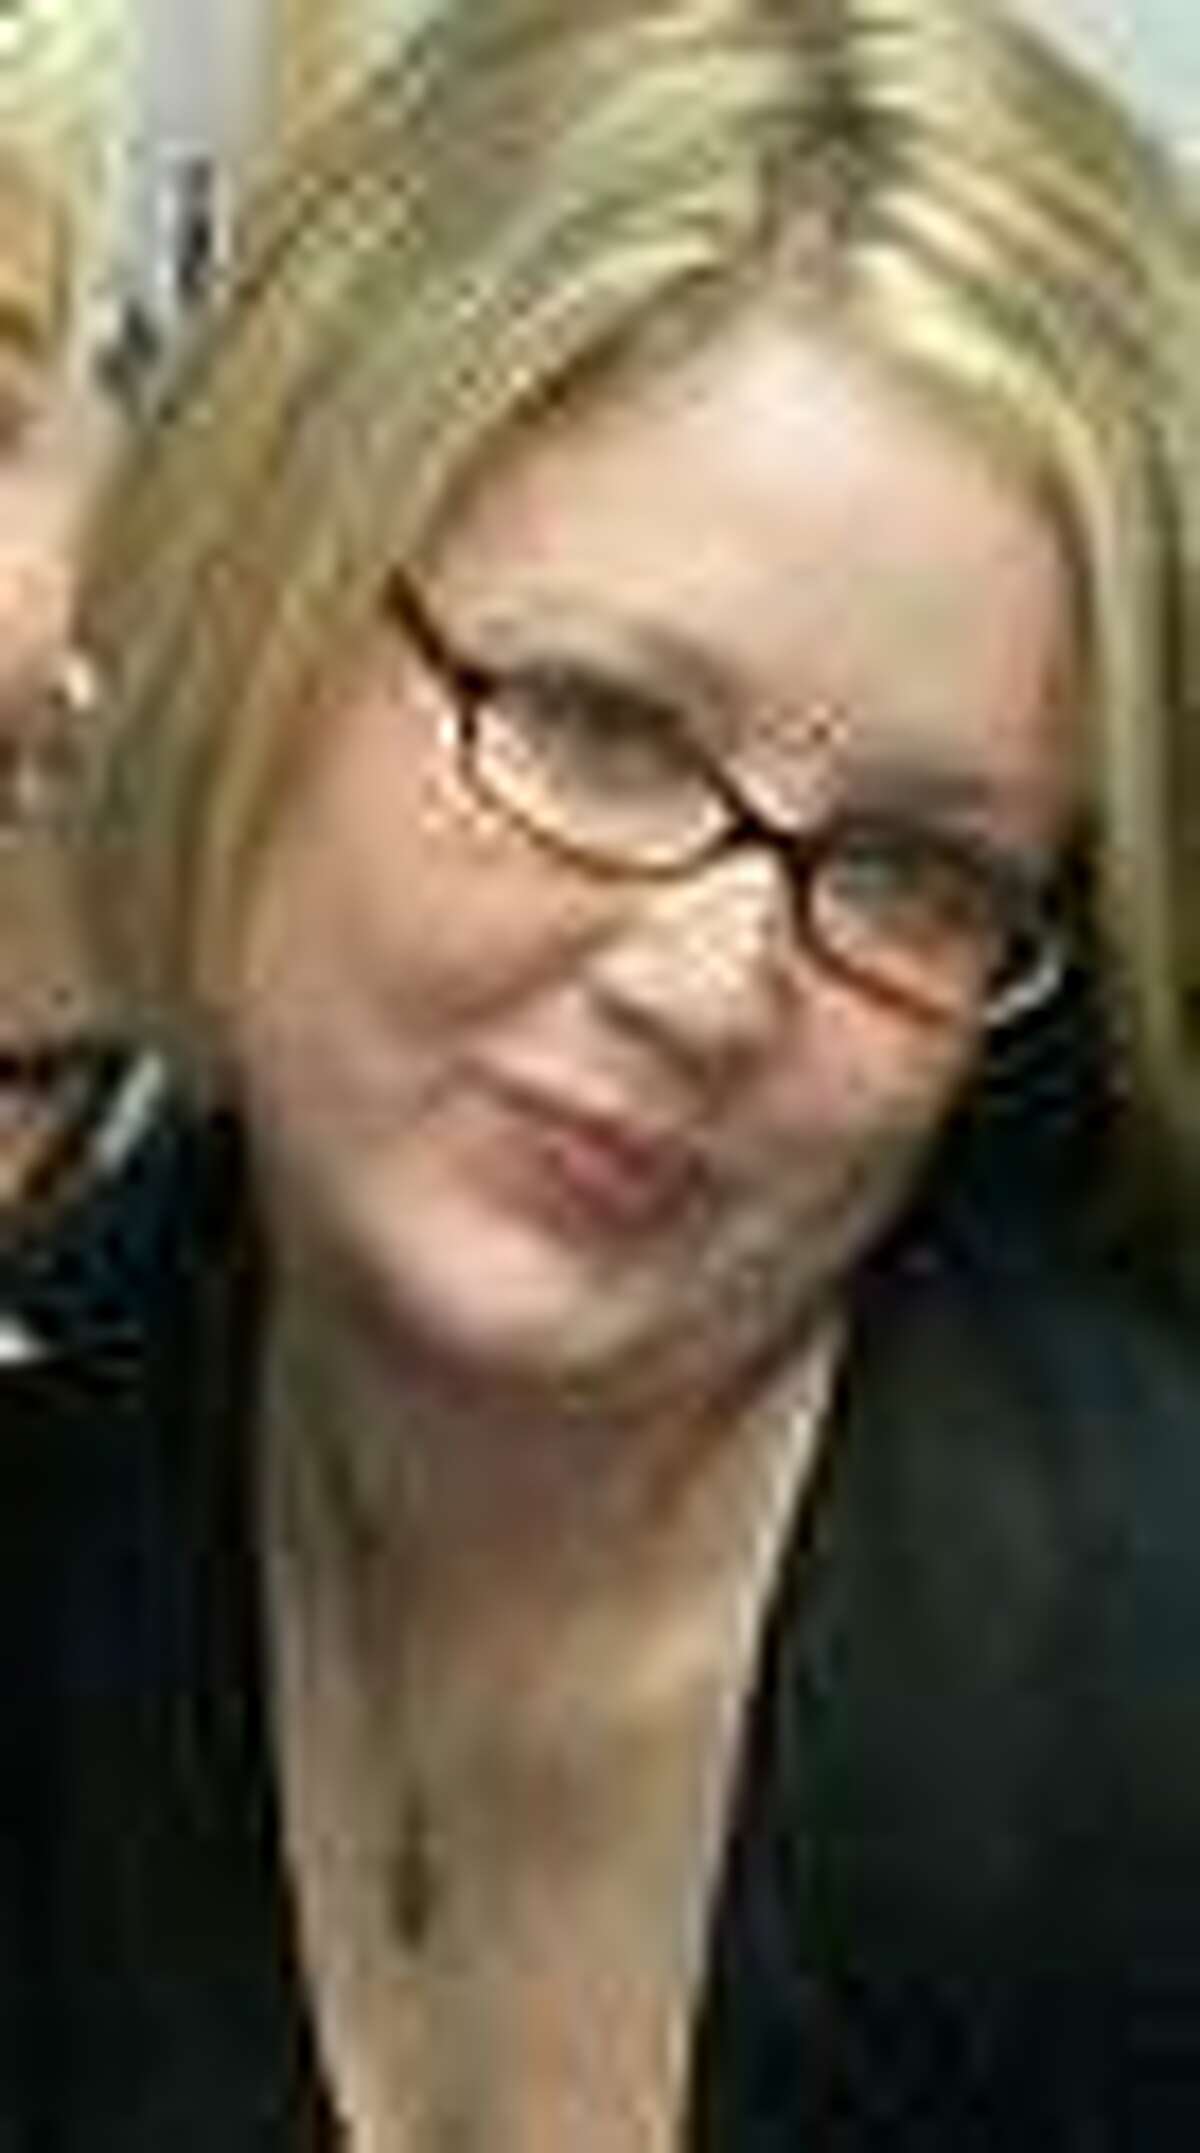 Amanda King, missing, was last seen in October 2013.